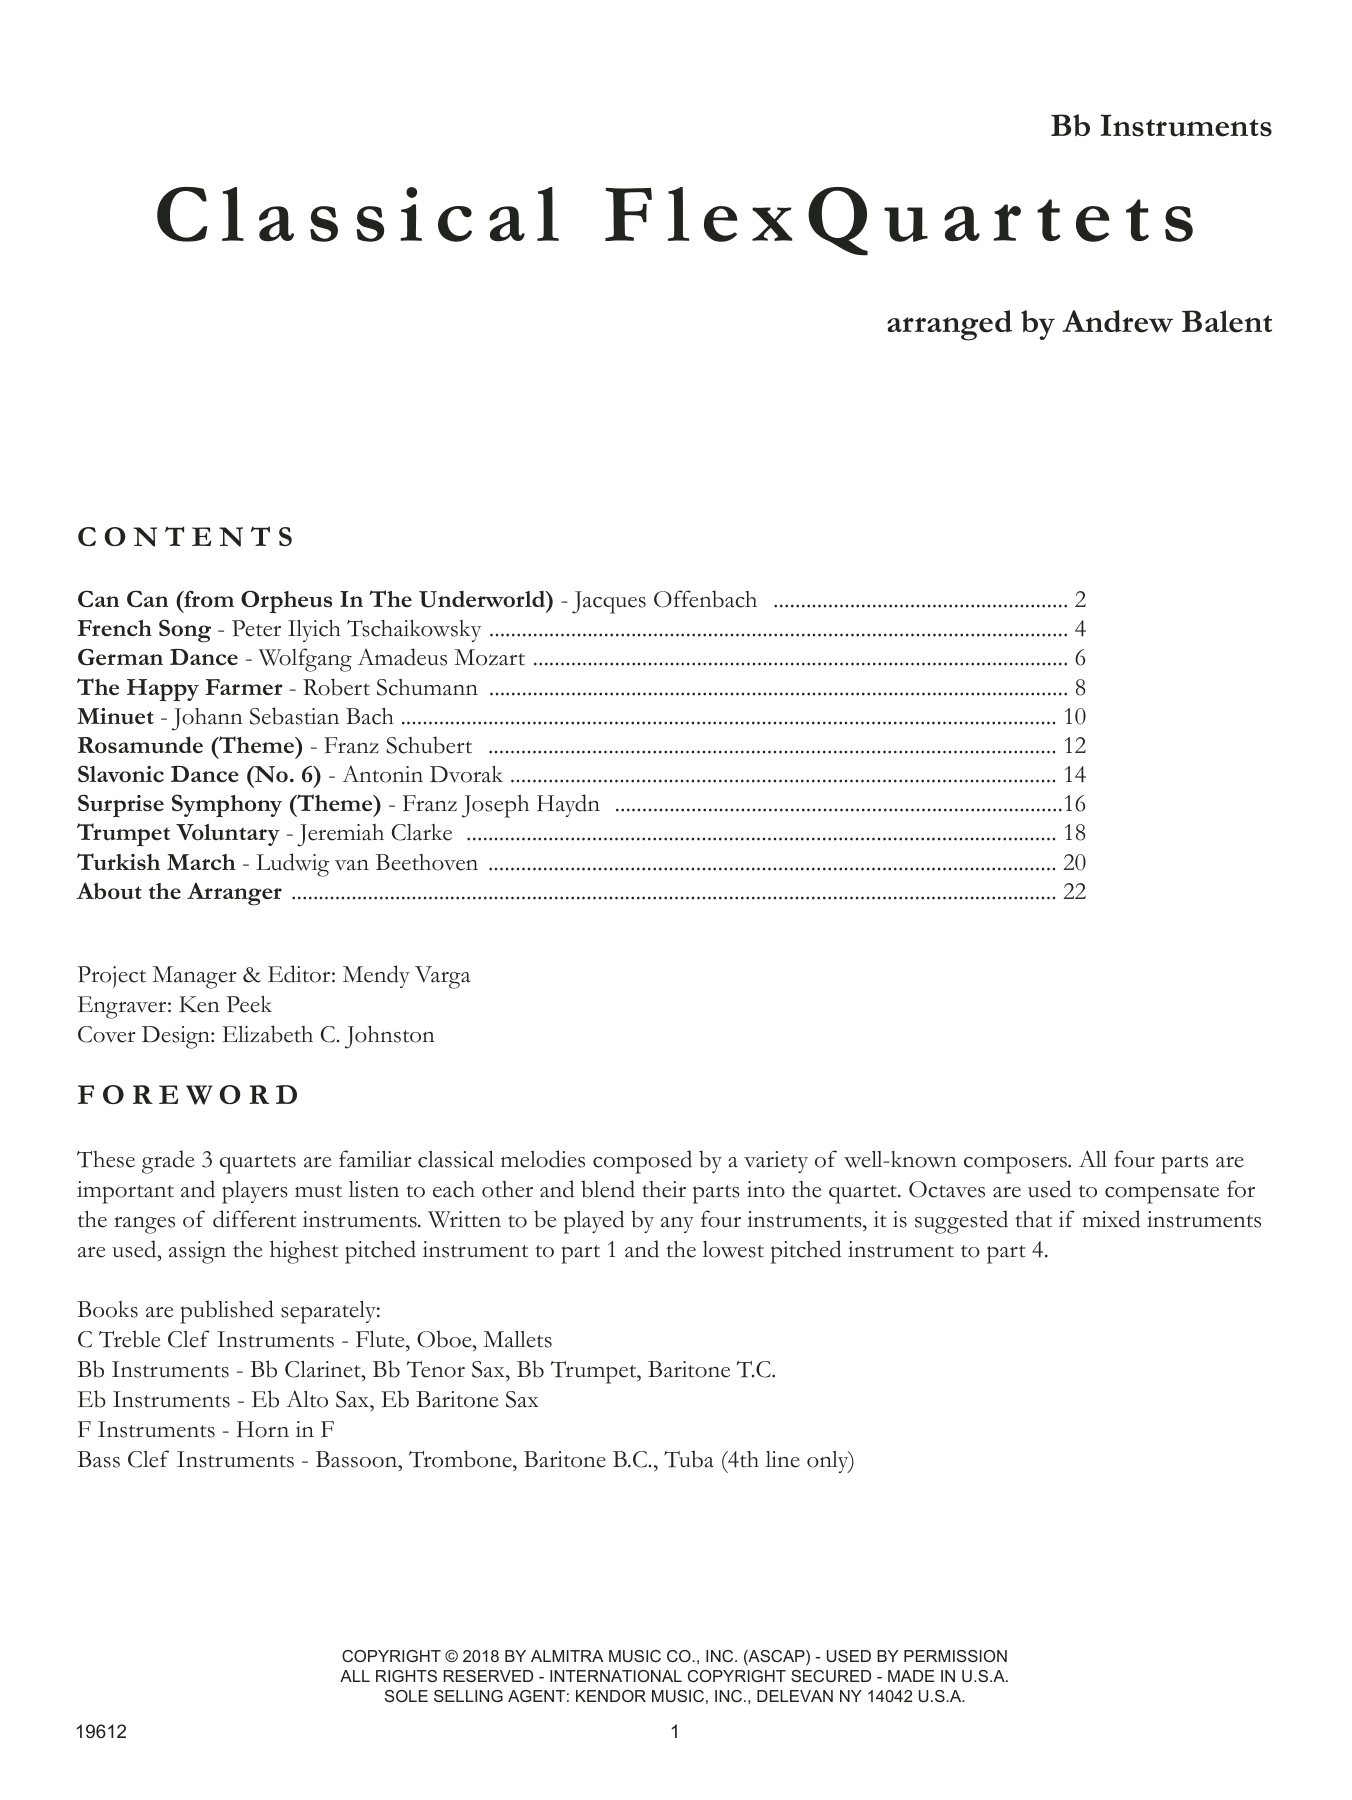 Download Andrew Balent Classical Flexquartets - Bb Instruments Sheet Music